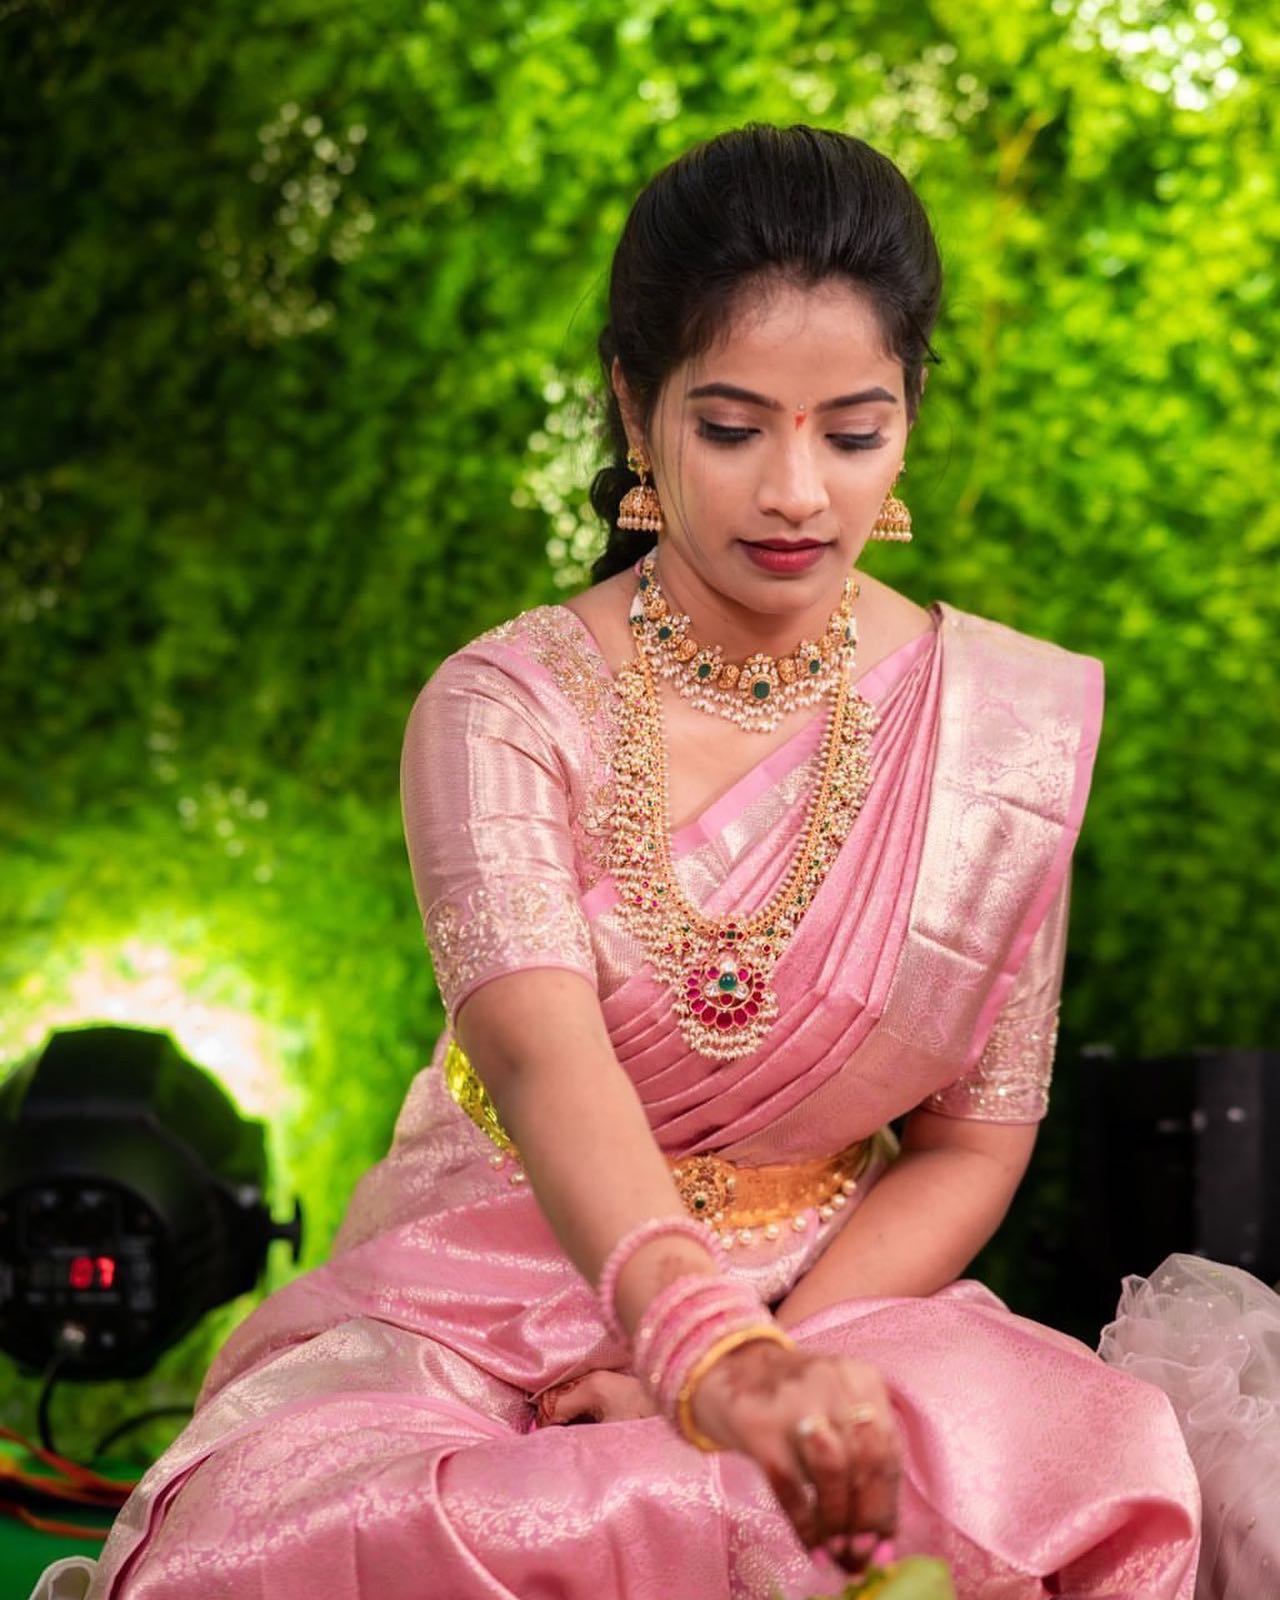 Best Kerala Bridal Makeup Ideas for Wedding in 2023